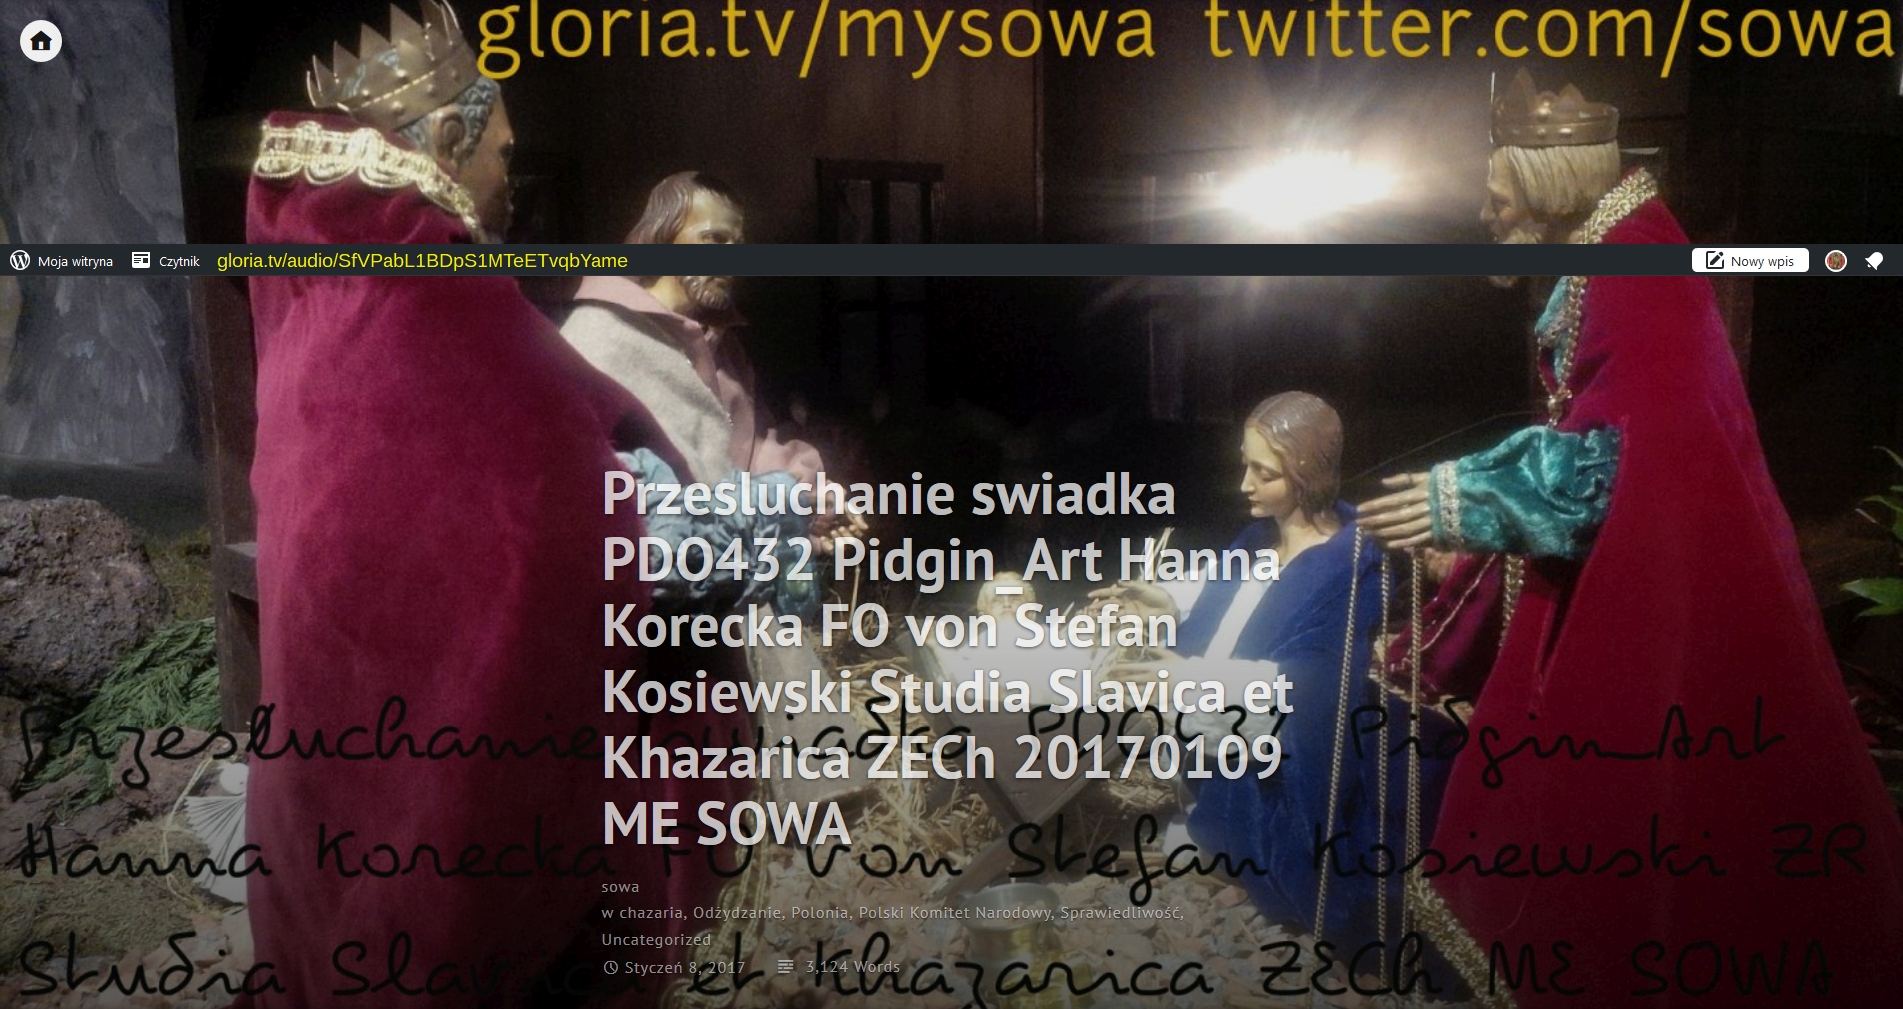 screenshot-2017-11-15-przesluchanie-przesluchanie swiadka-pdo432-pidgin-art-hanna-korecka-fo-von-stefan-kosiewski-studia-slavica-et-khaza